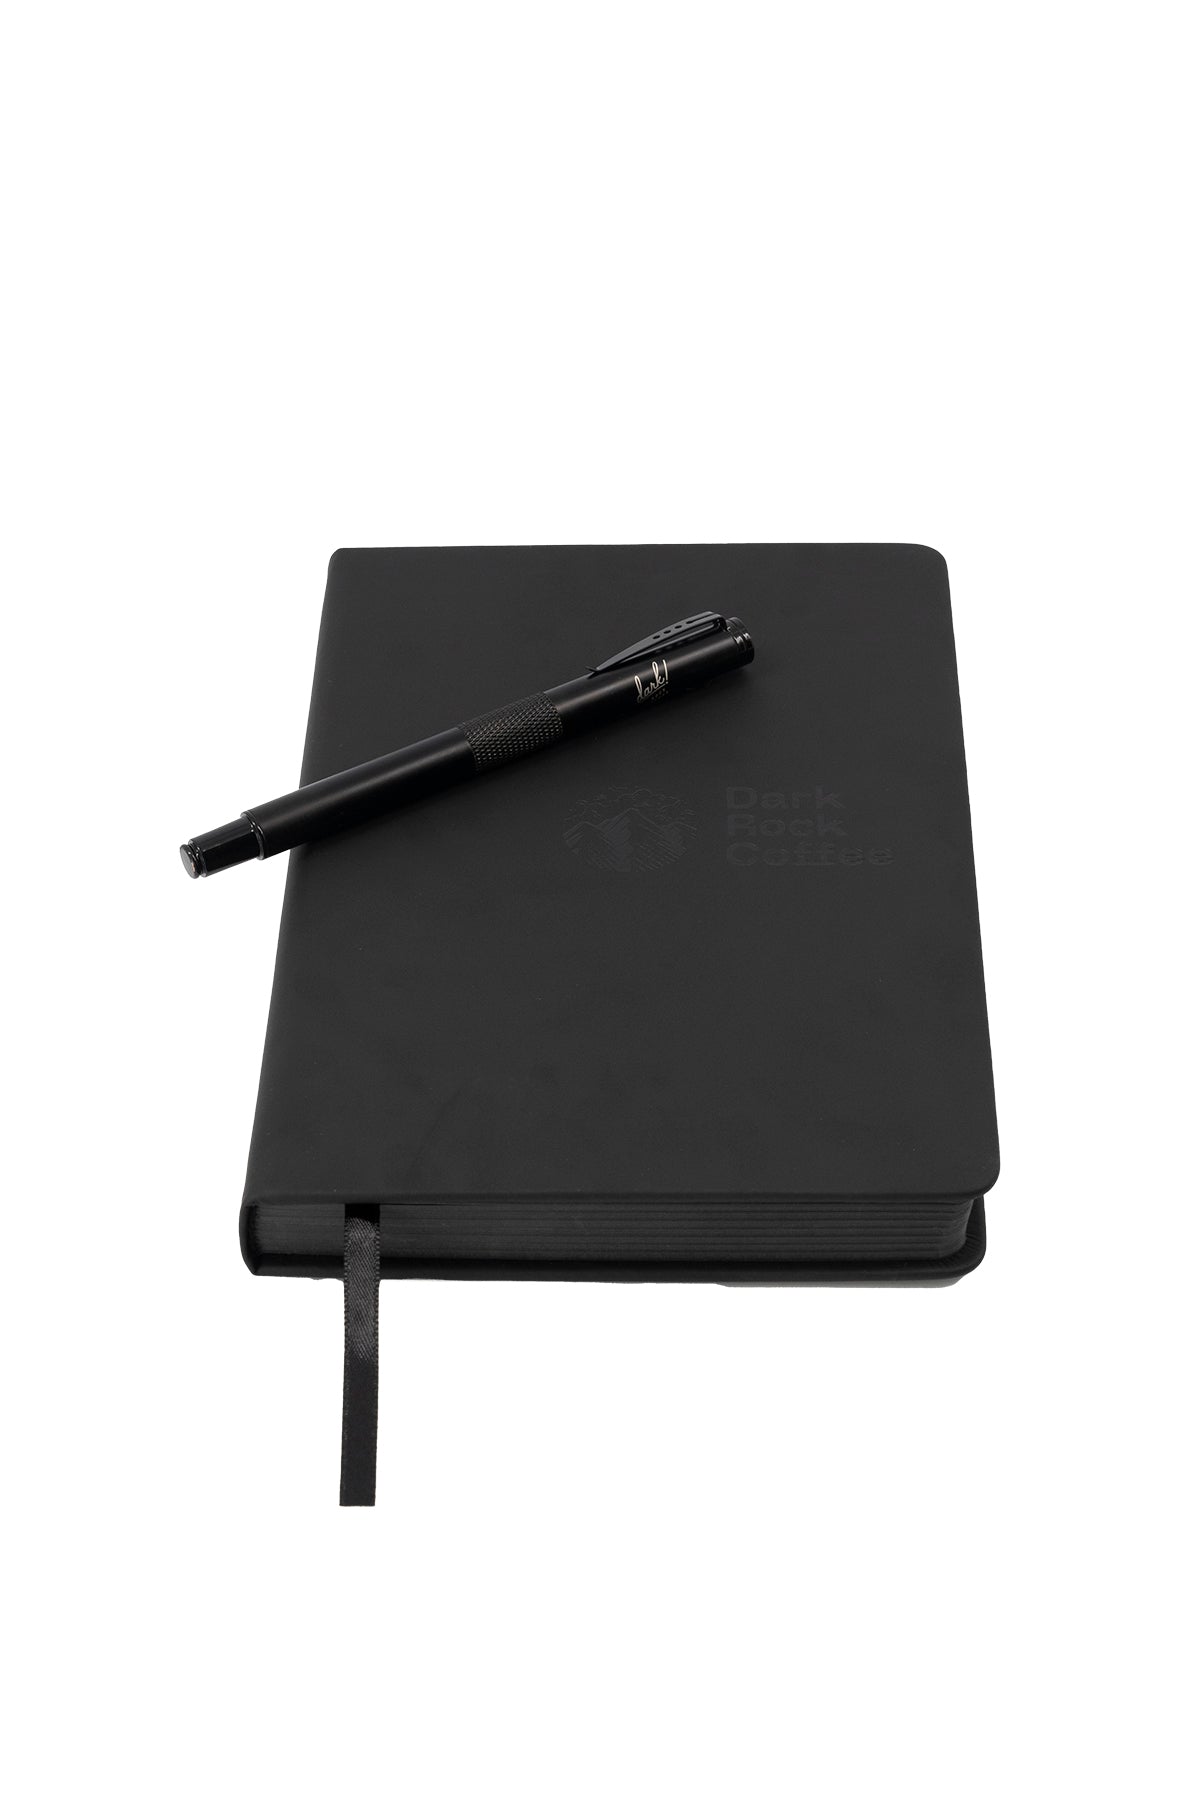 Dark! Notebook & Pen bundle